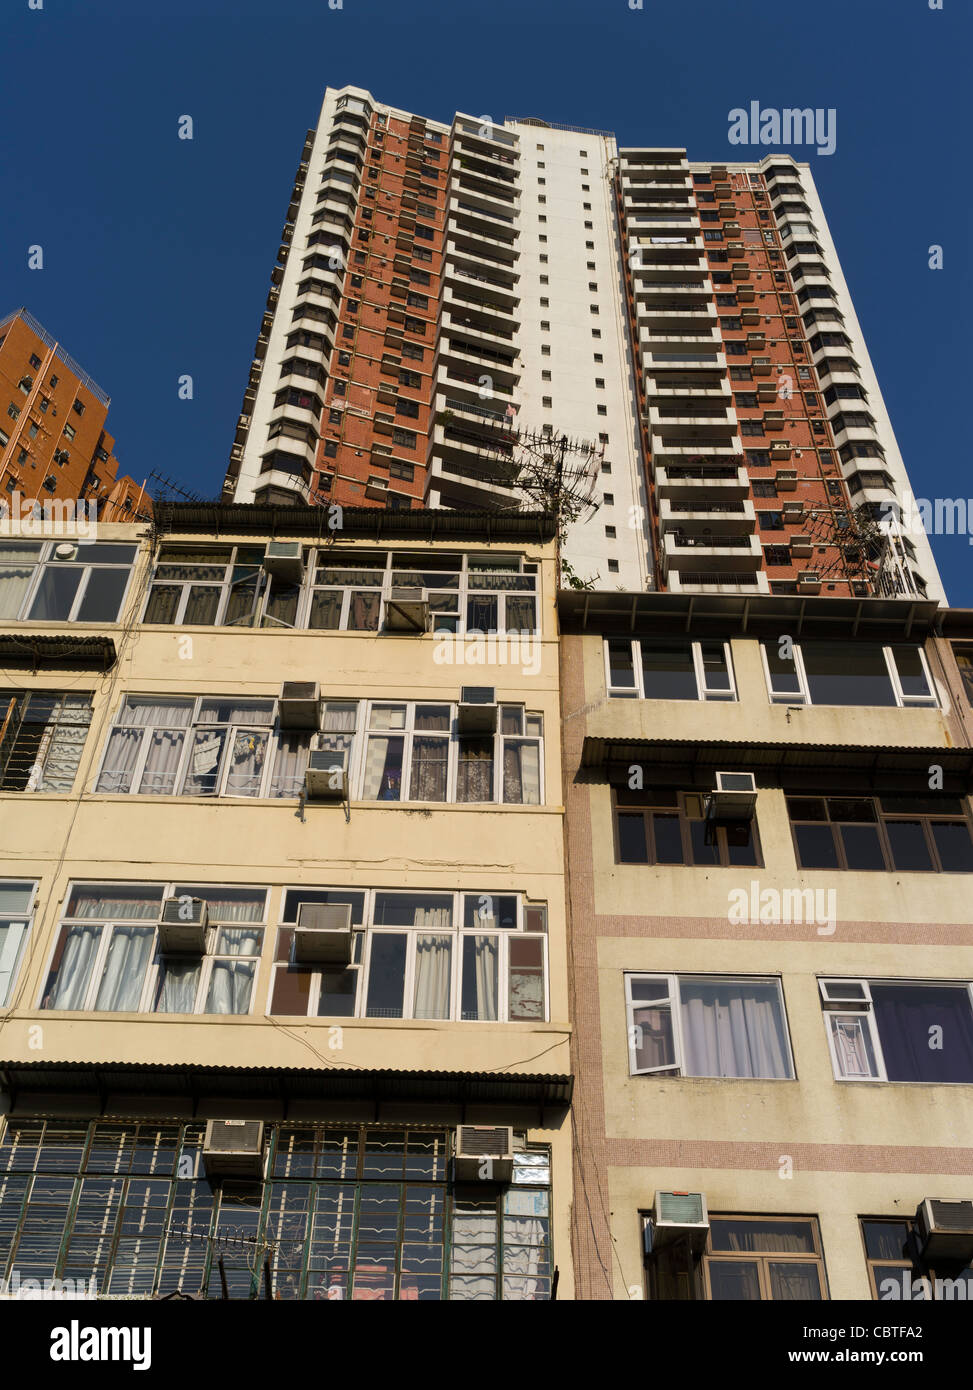 Dh chinesischen Gebäuden CAUSEWAY BAY HONG KONG Alt Neu high rise Residential Tower Block Wohnungen china Gebäude flachen Häuser Stockfoto